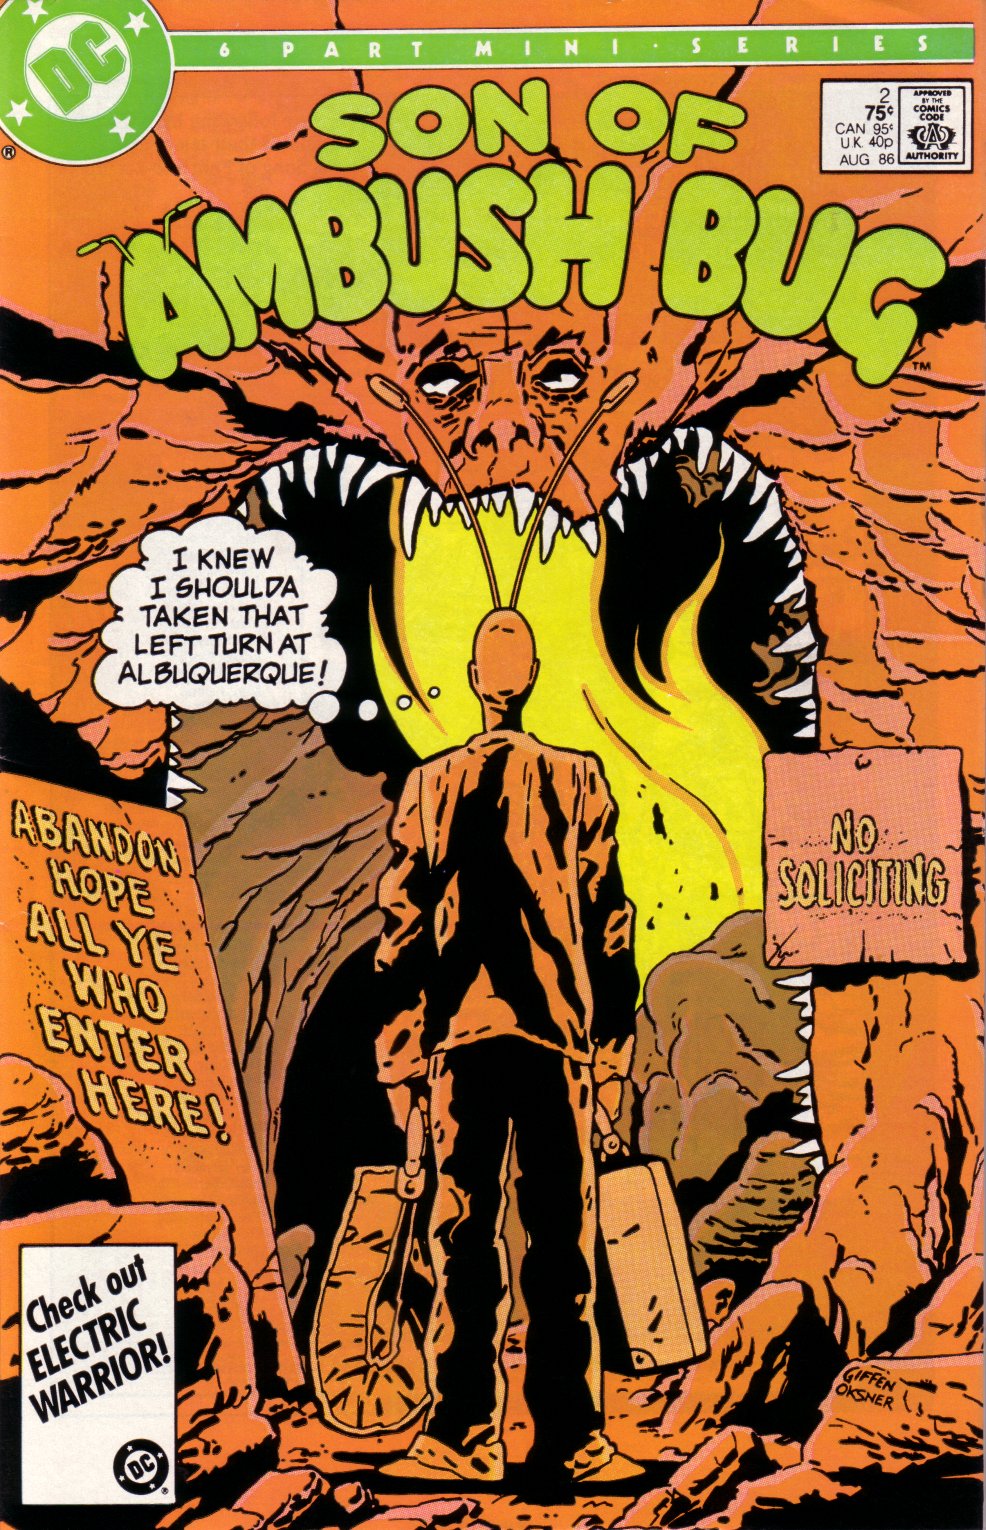 Read online Son of Ambush Bug comic -  Issue #2 - 1